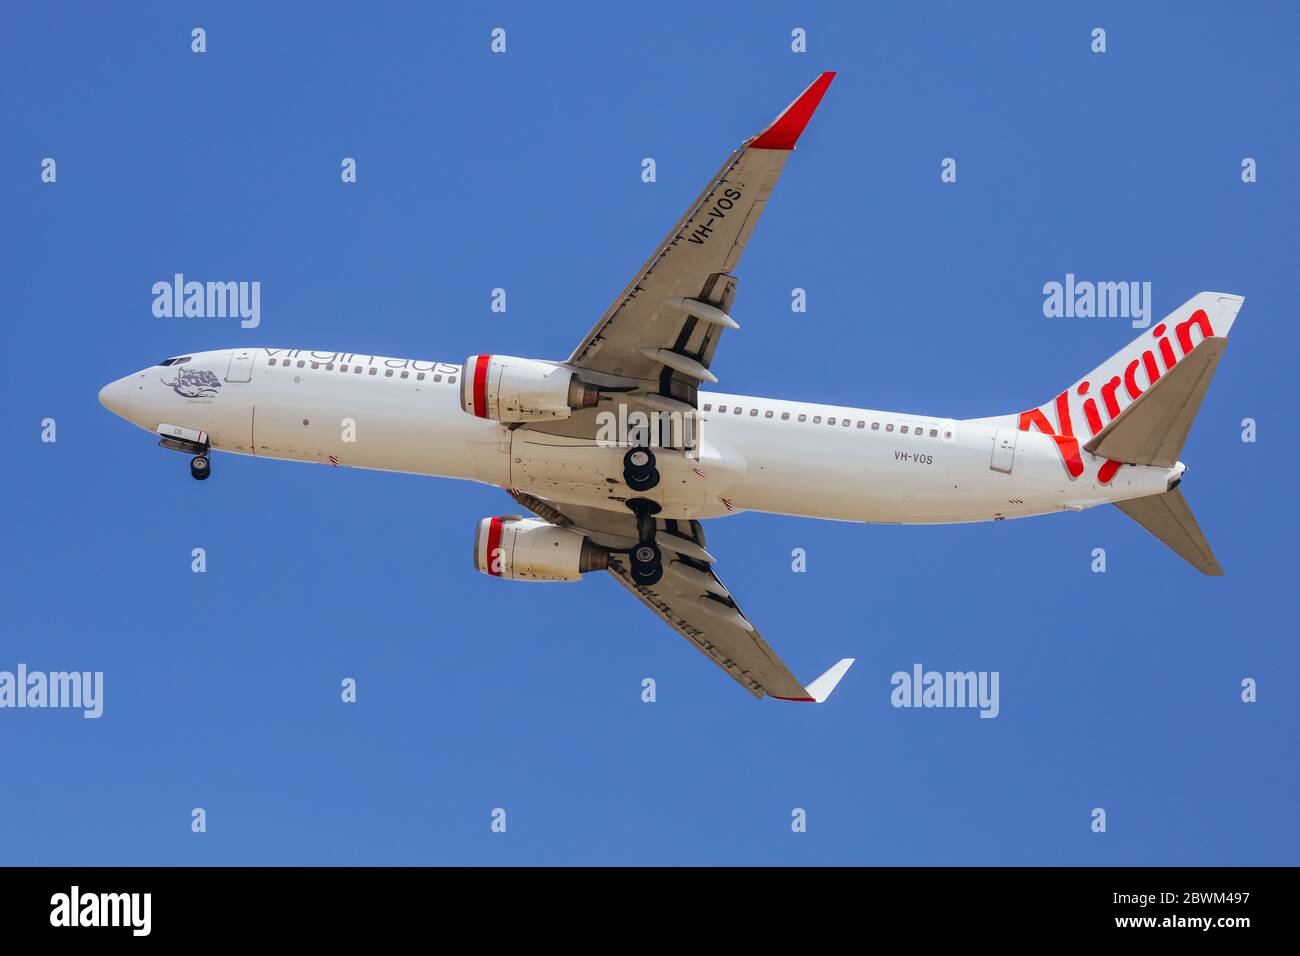 Virgin Airlines Operating in Australia Stock Photo